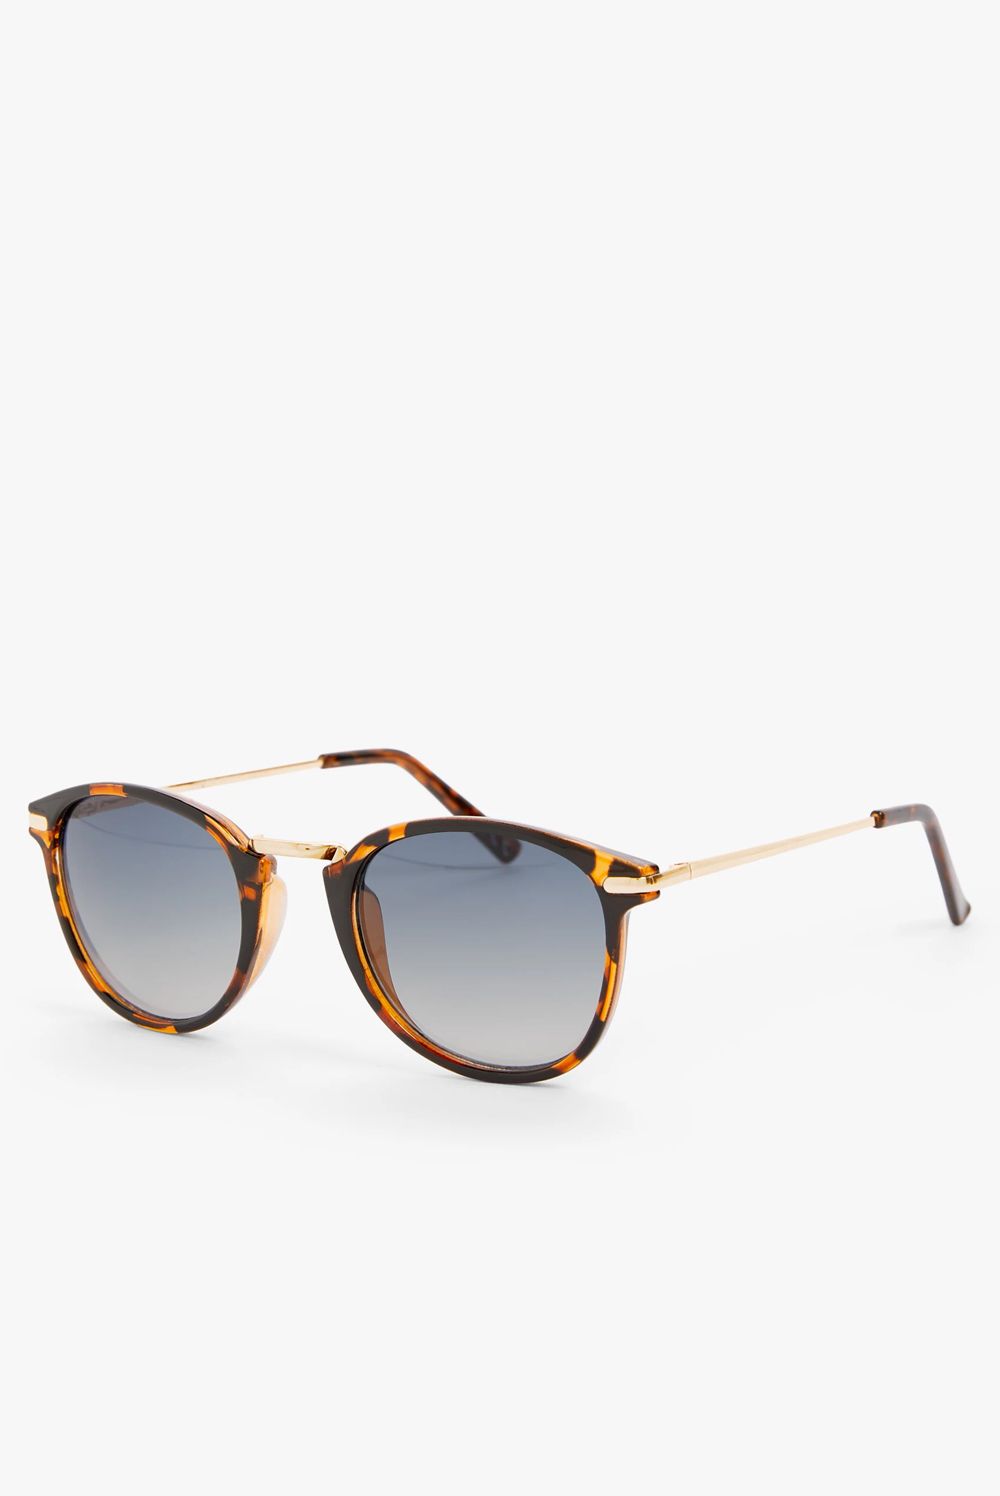 John Lewis & Partners Sunglasses, £25